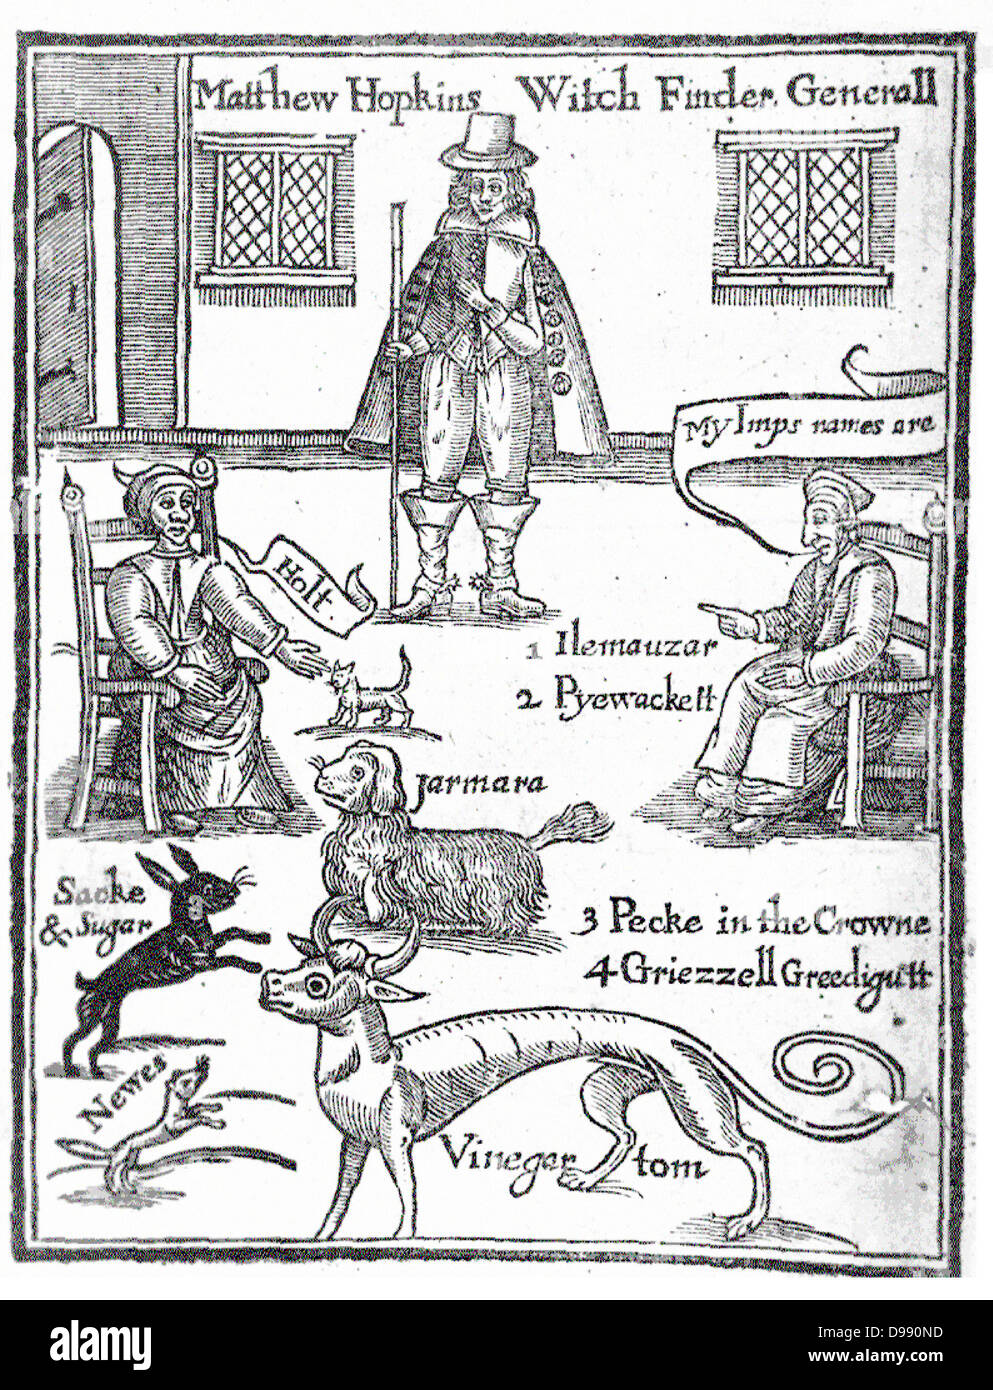 Xvii secolo inglese poster Matthew Hopkins la sSelf-nominato Witchfinder General Foto Stock